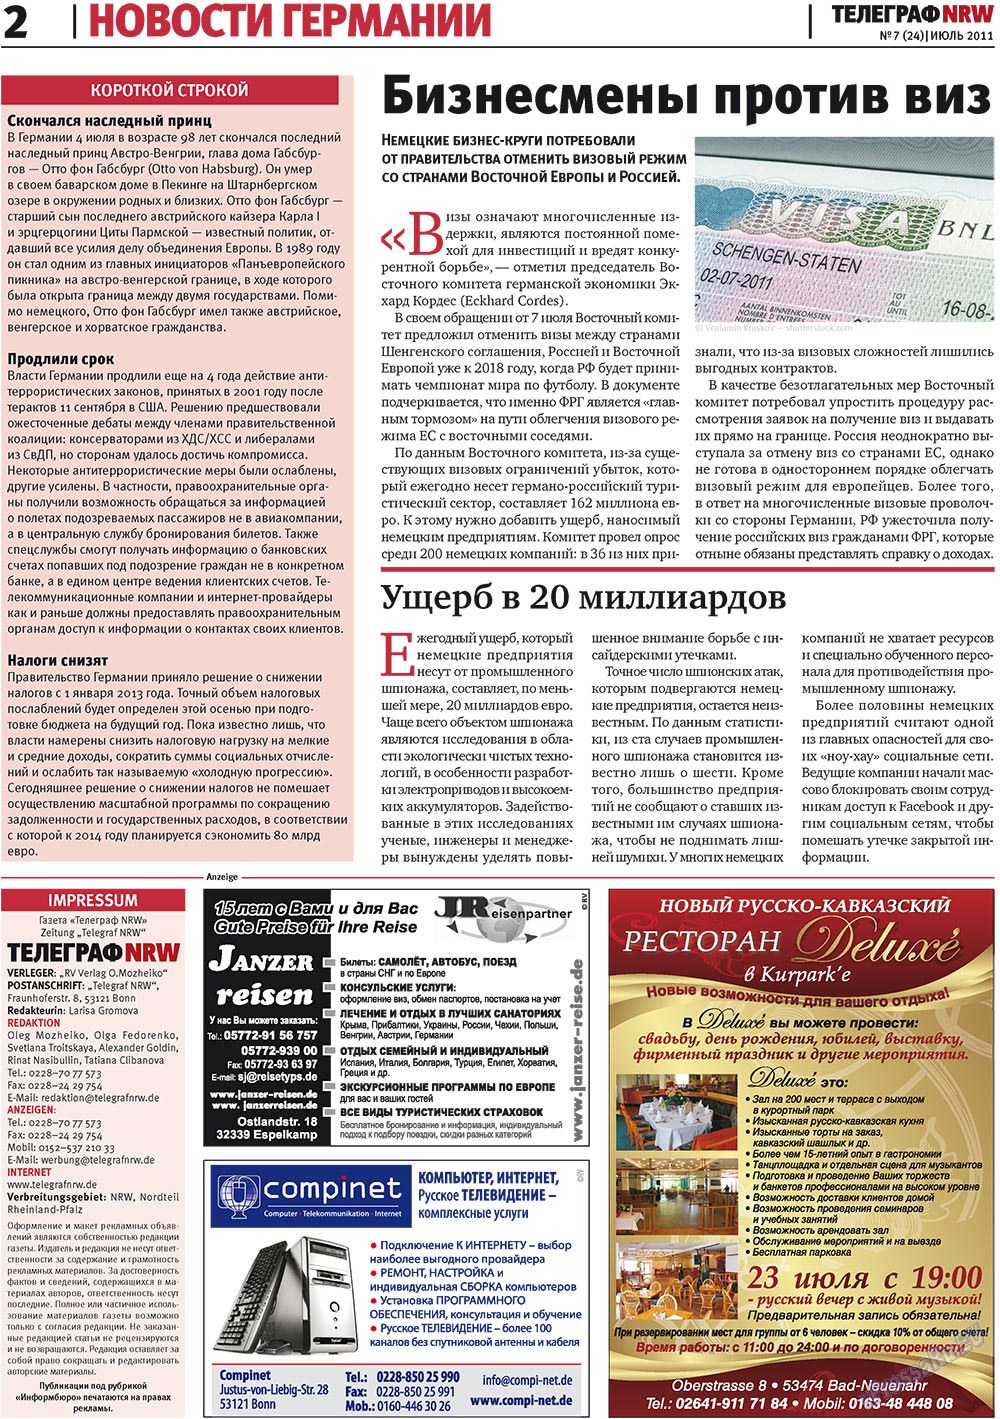 Телеграф NRW, газета. 2011 №7 стр.2